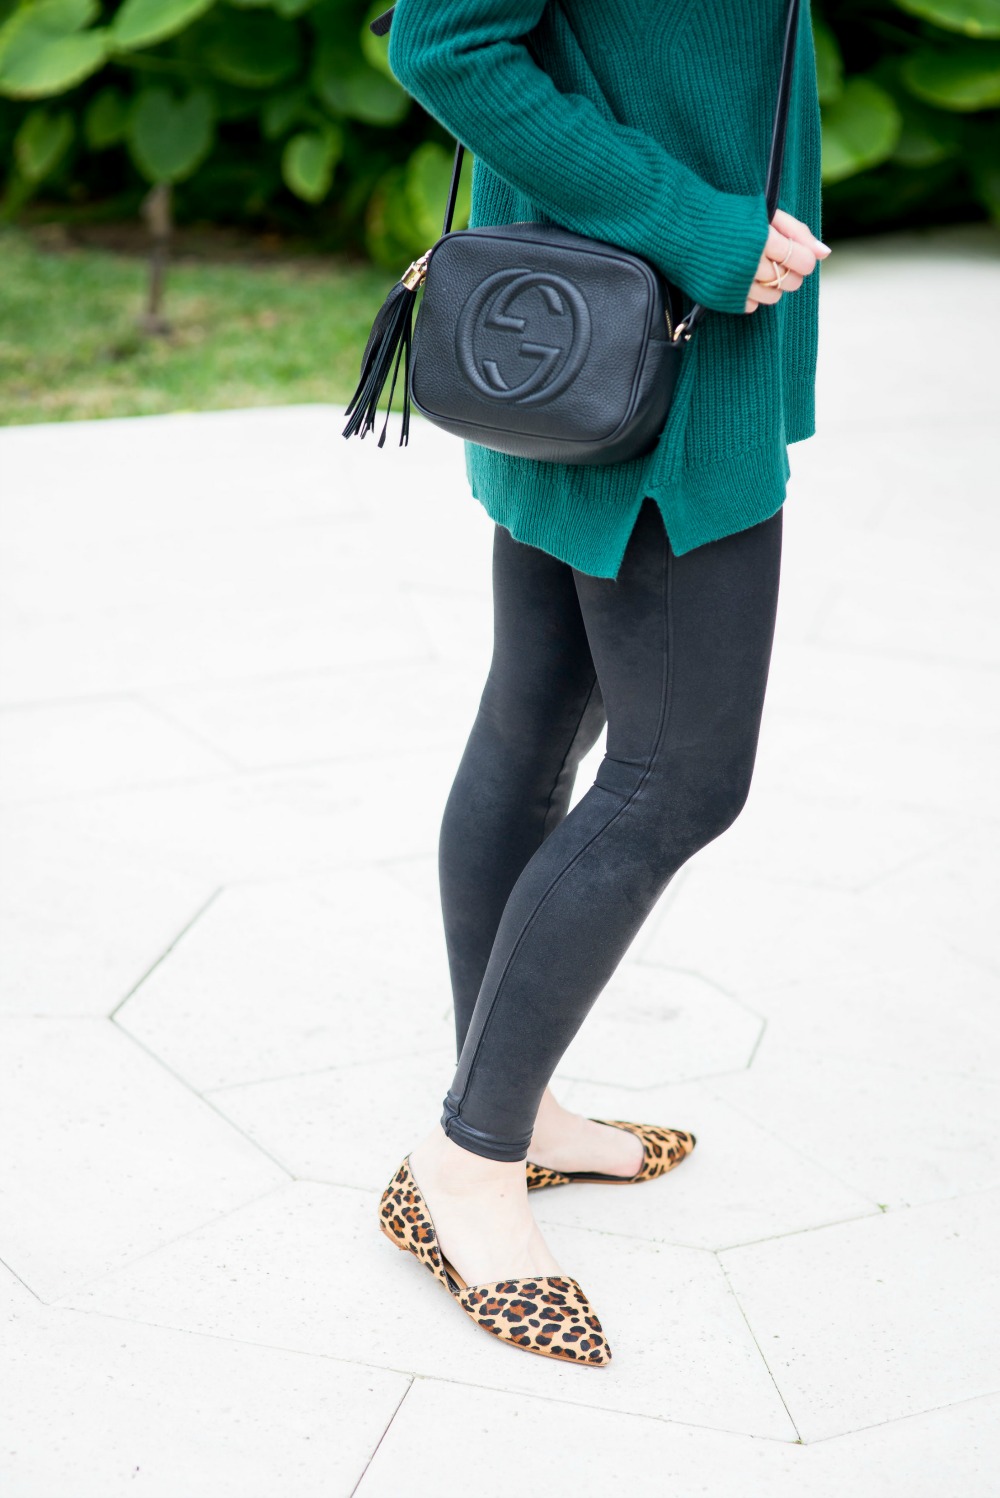 Spanx leggings - Spanx Black Leggings by popular Florida style blogger The Modern Savvy